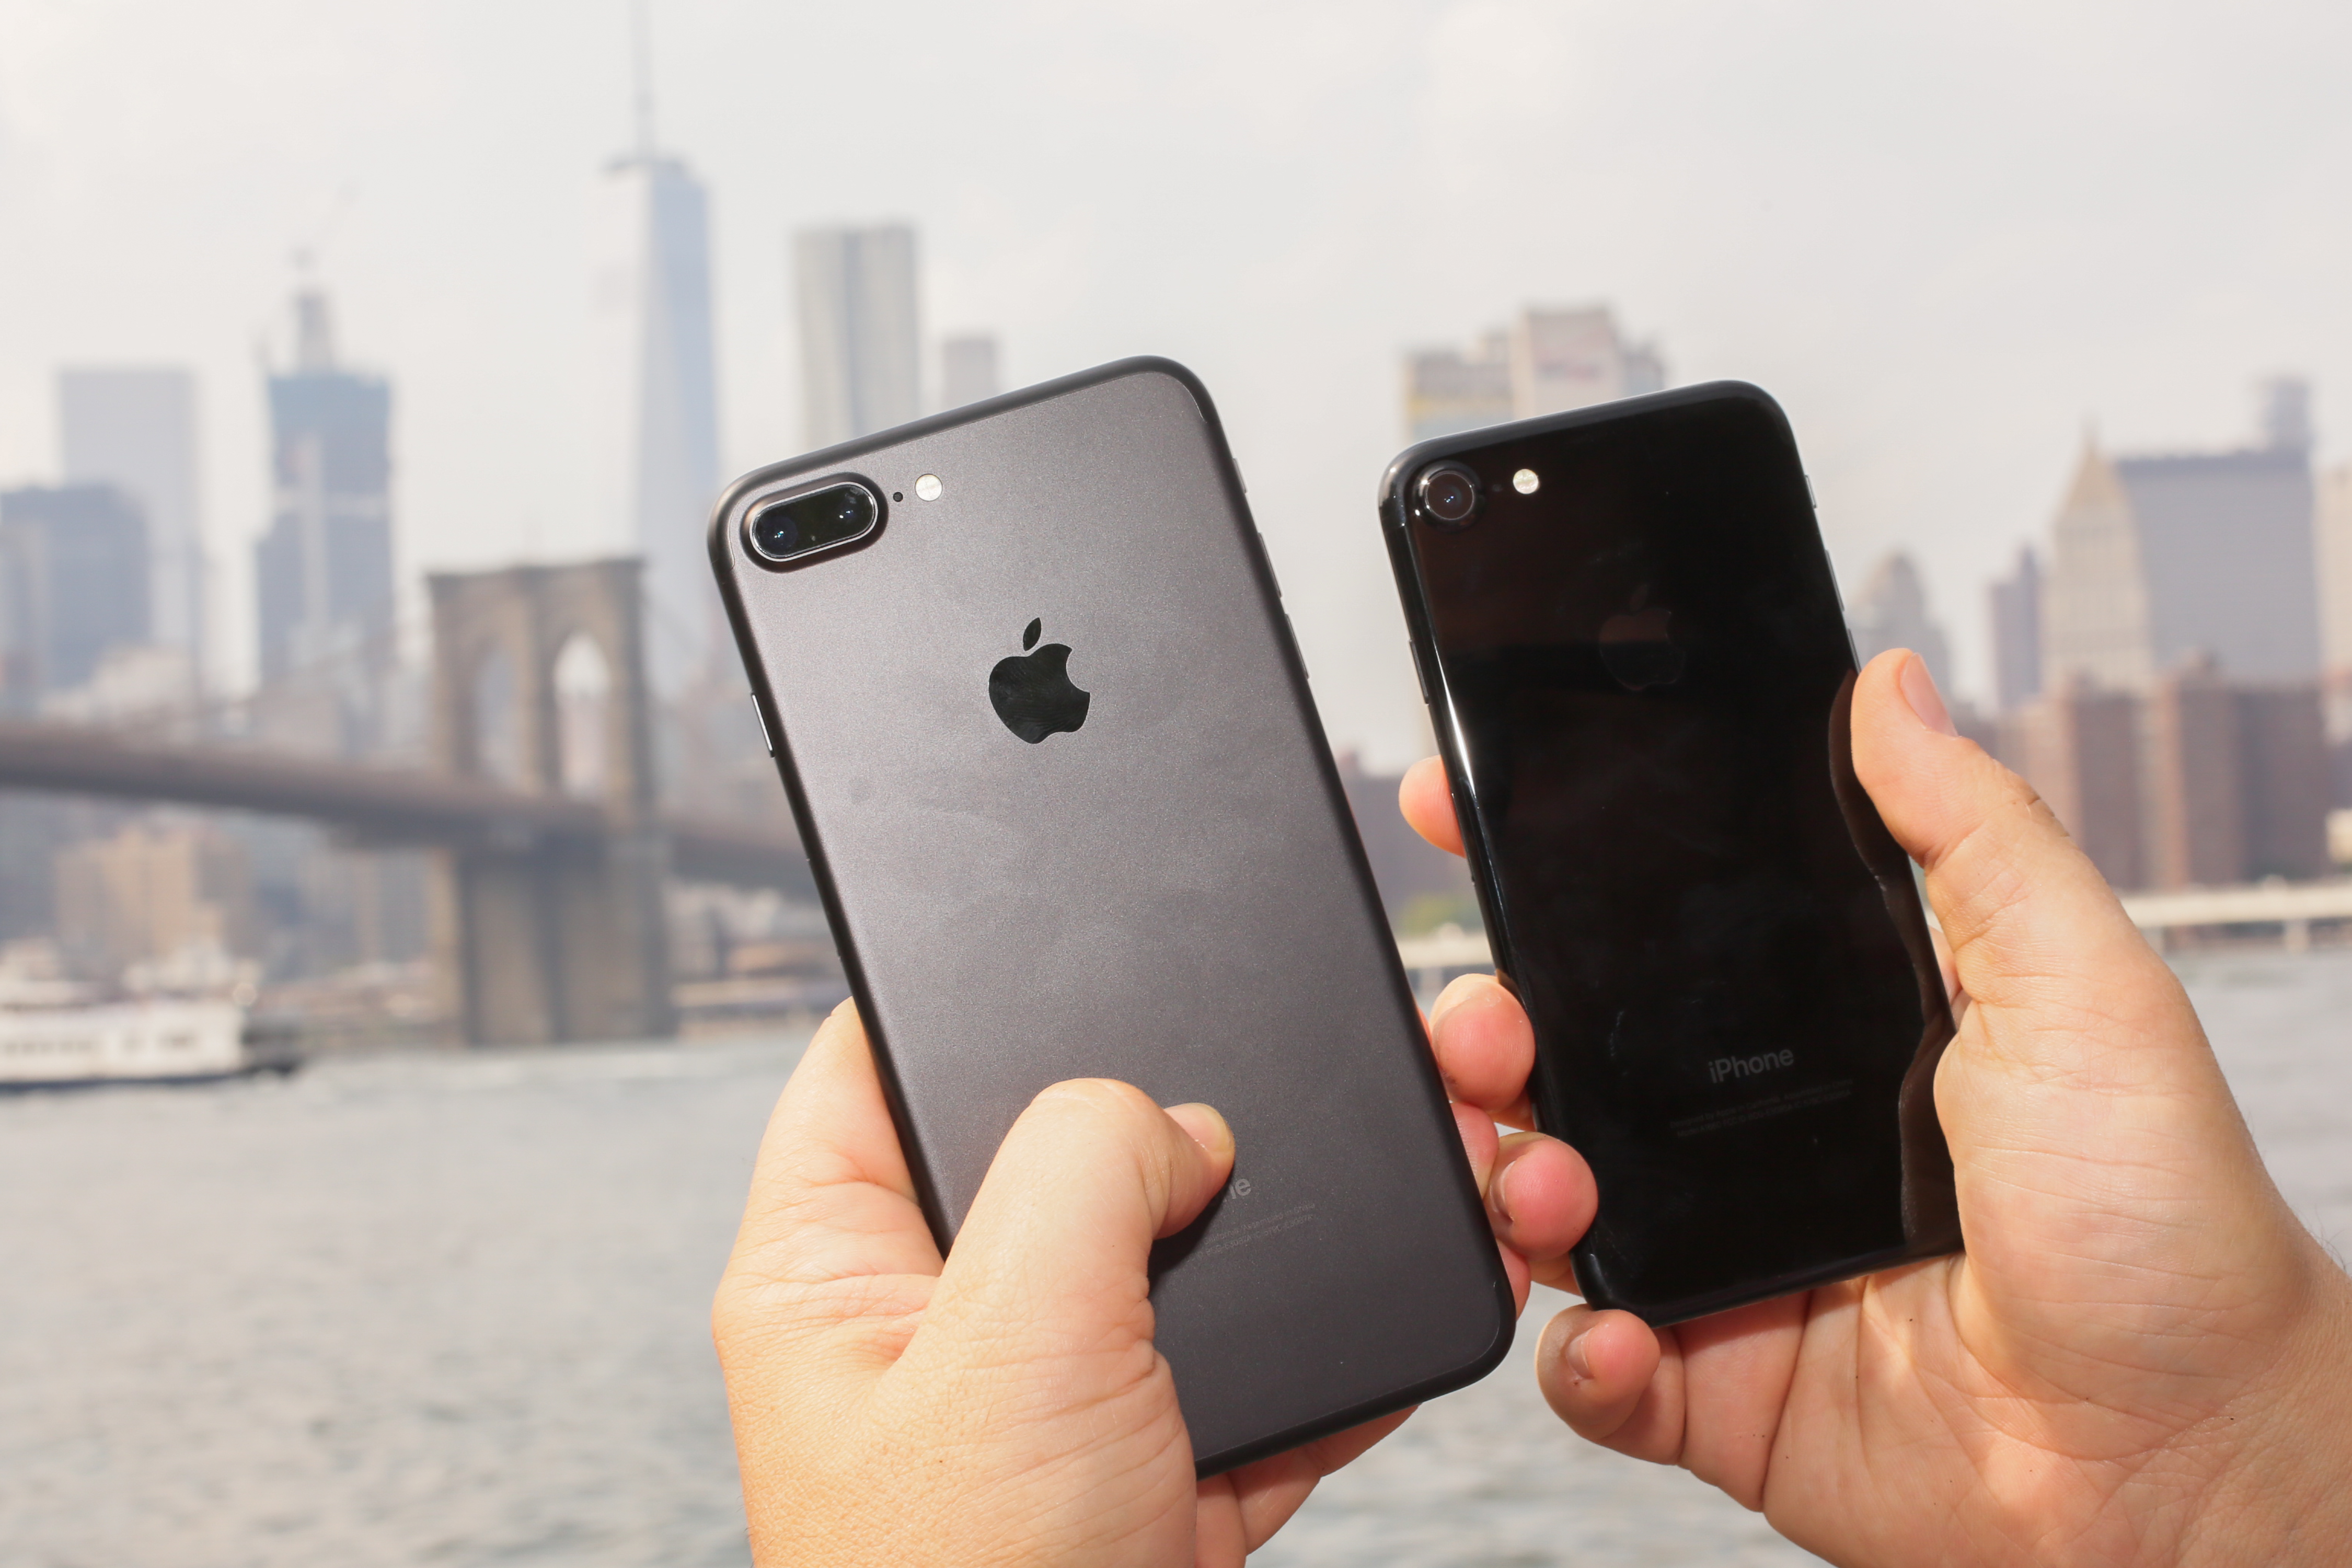 moe morfine Duplicaat Apple iPhone 7 Plus review: The photographer's phone - CNET